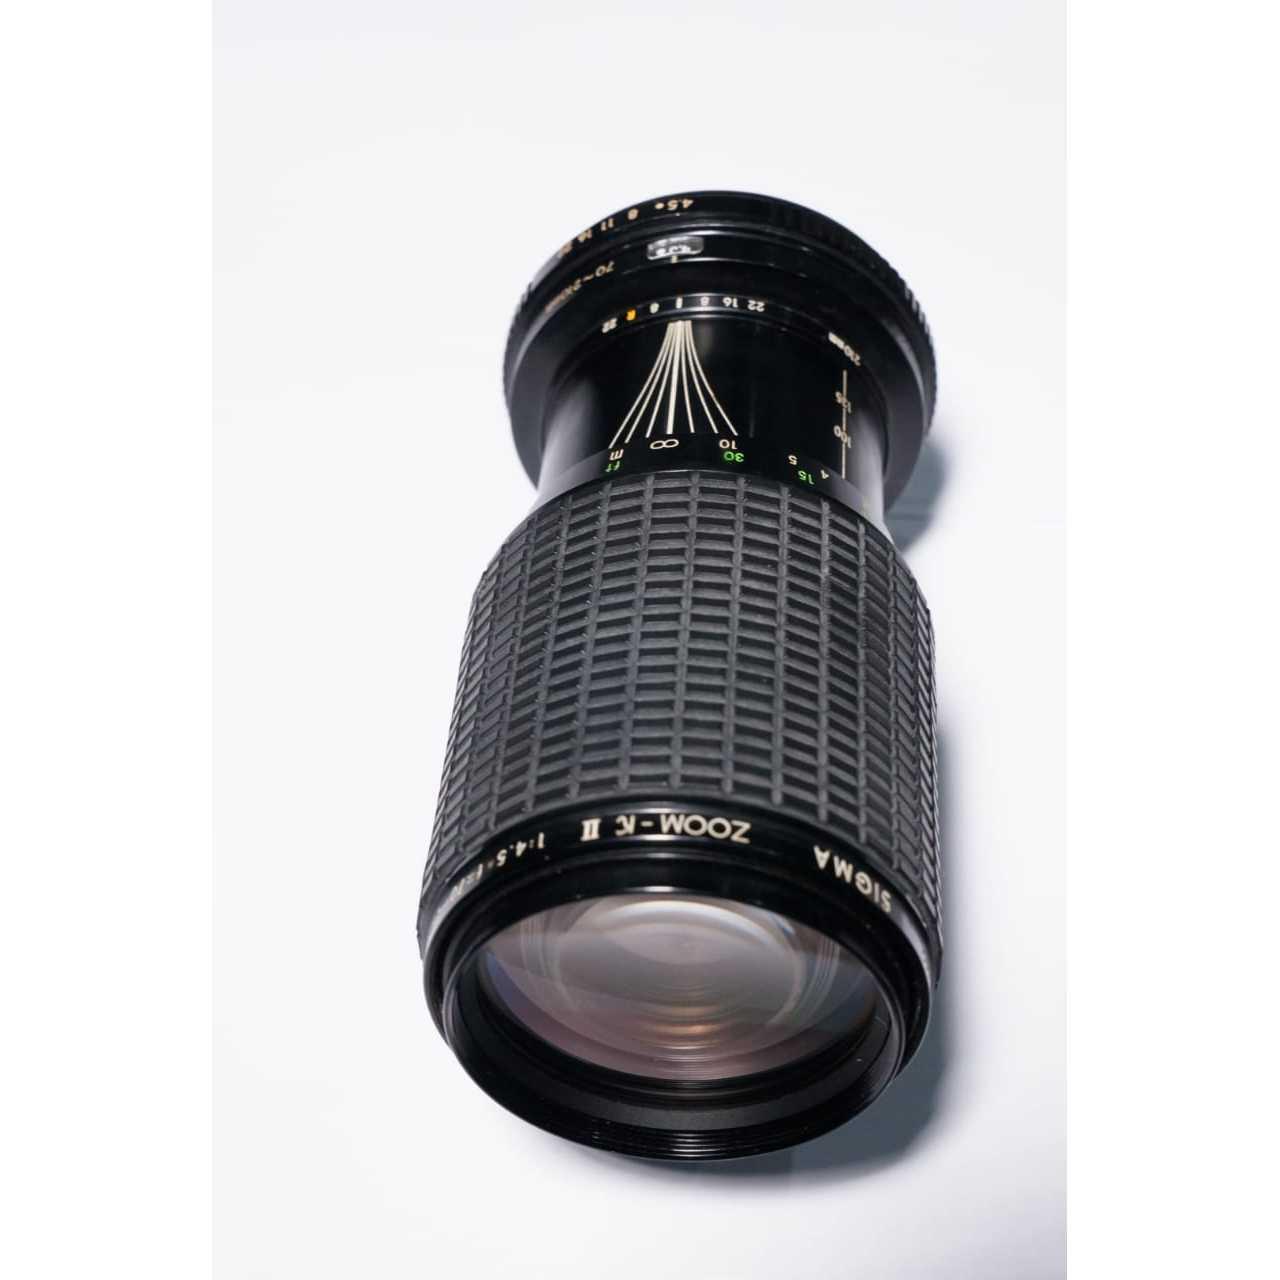 Lensa Manual Sigma Zoom K-ii 70-210mm f/4.5 Mount Leica R